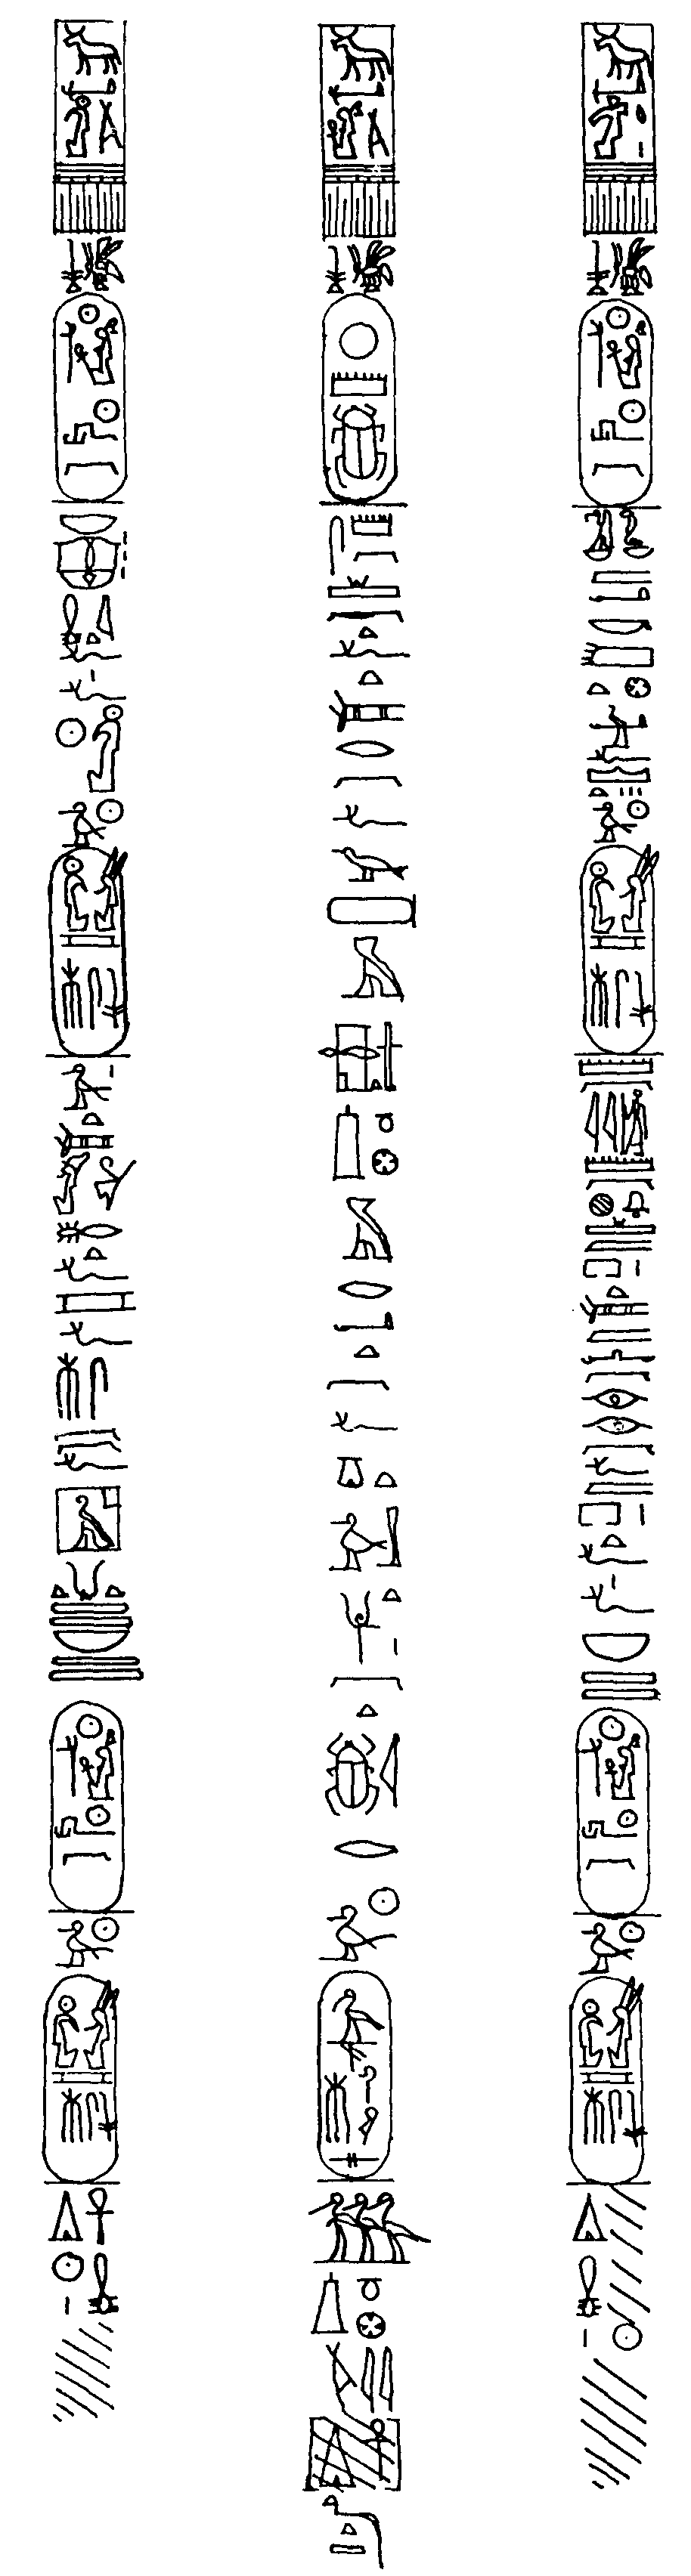 Hieroglyphics at West Face